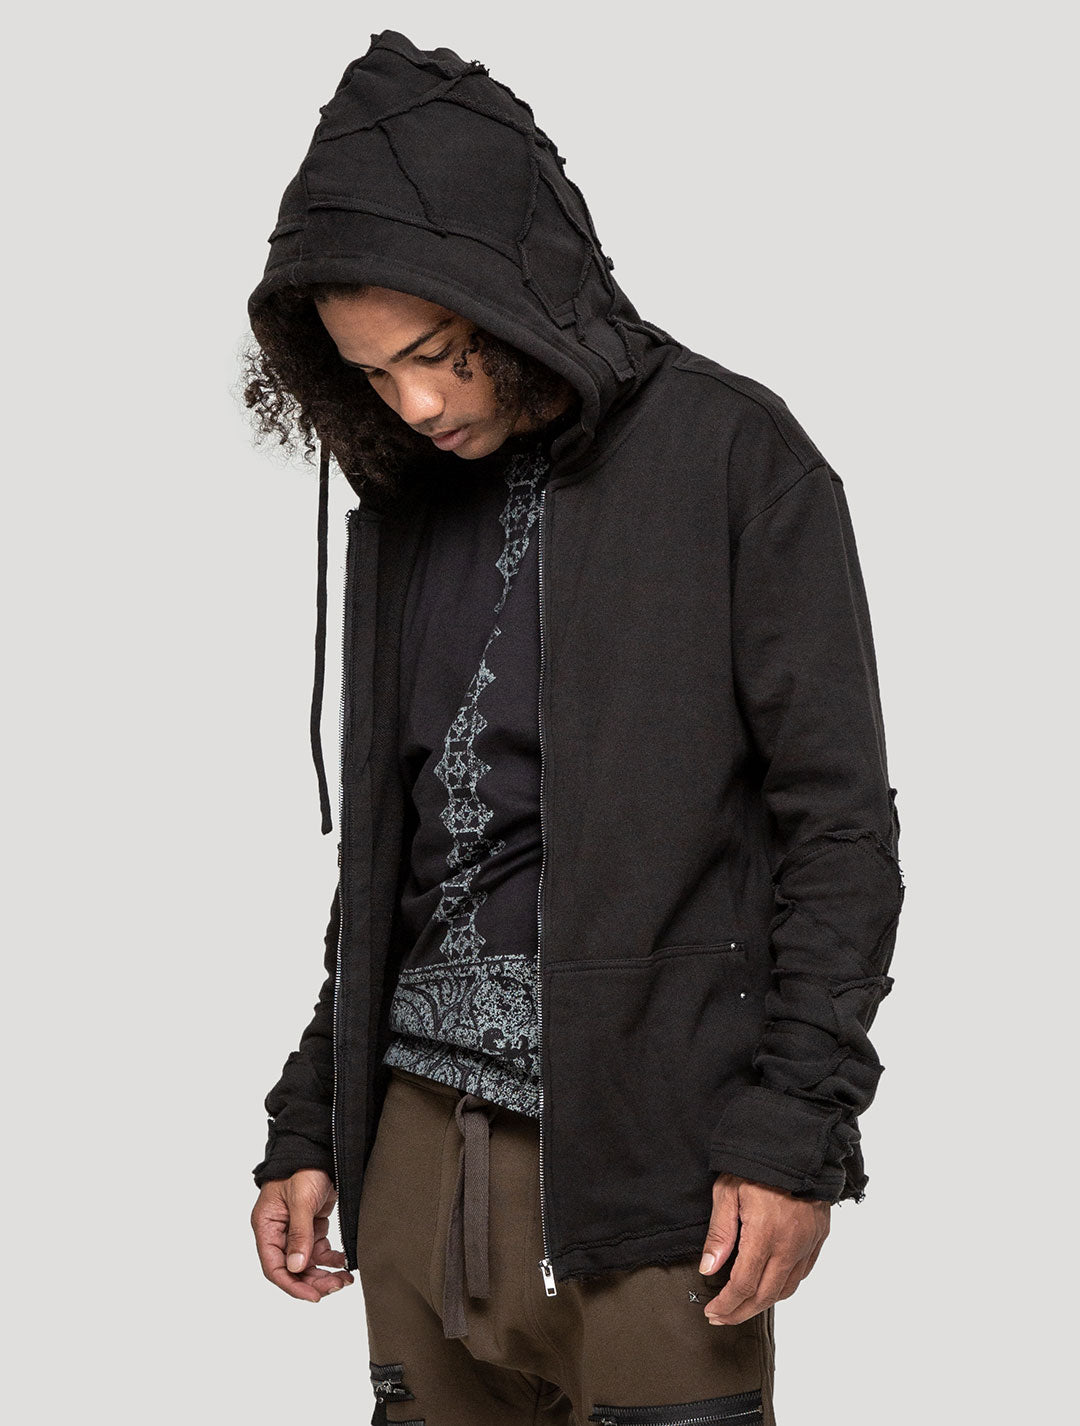 Black Pecoa Hooded Rmx Jacket - Psylo Fashion